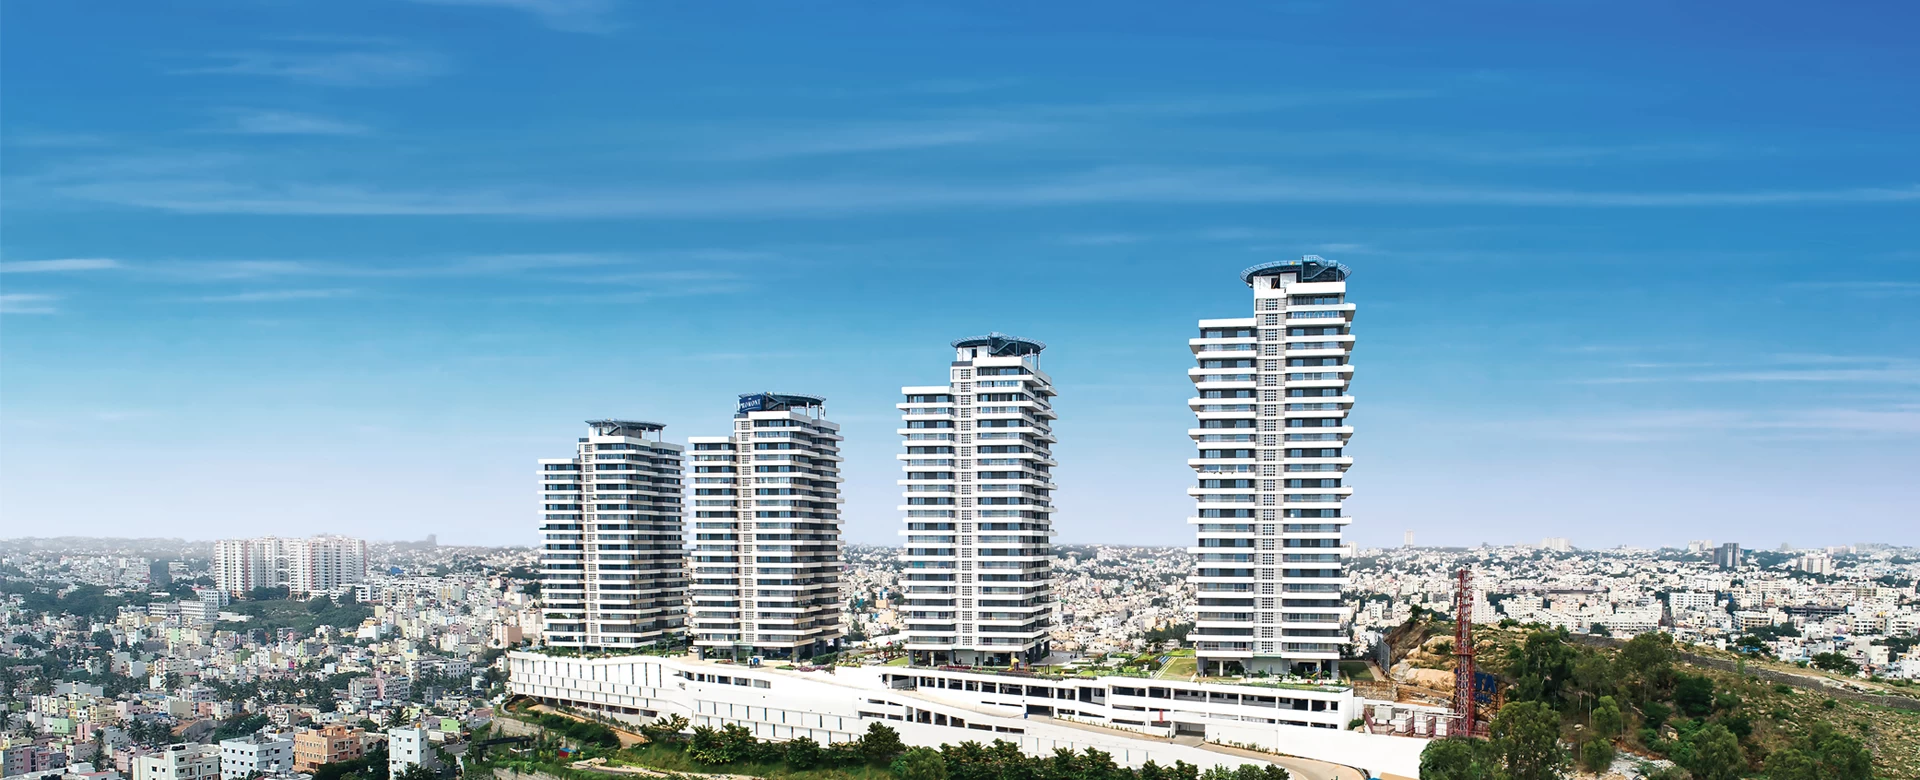 Tata Promont Luxury Apartments at Bangalore